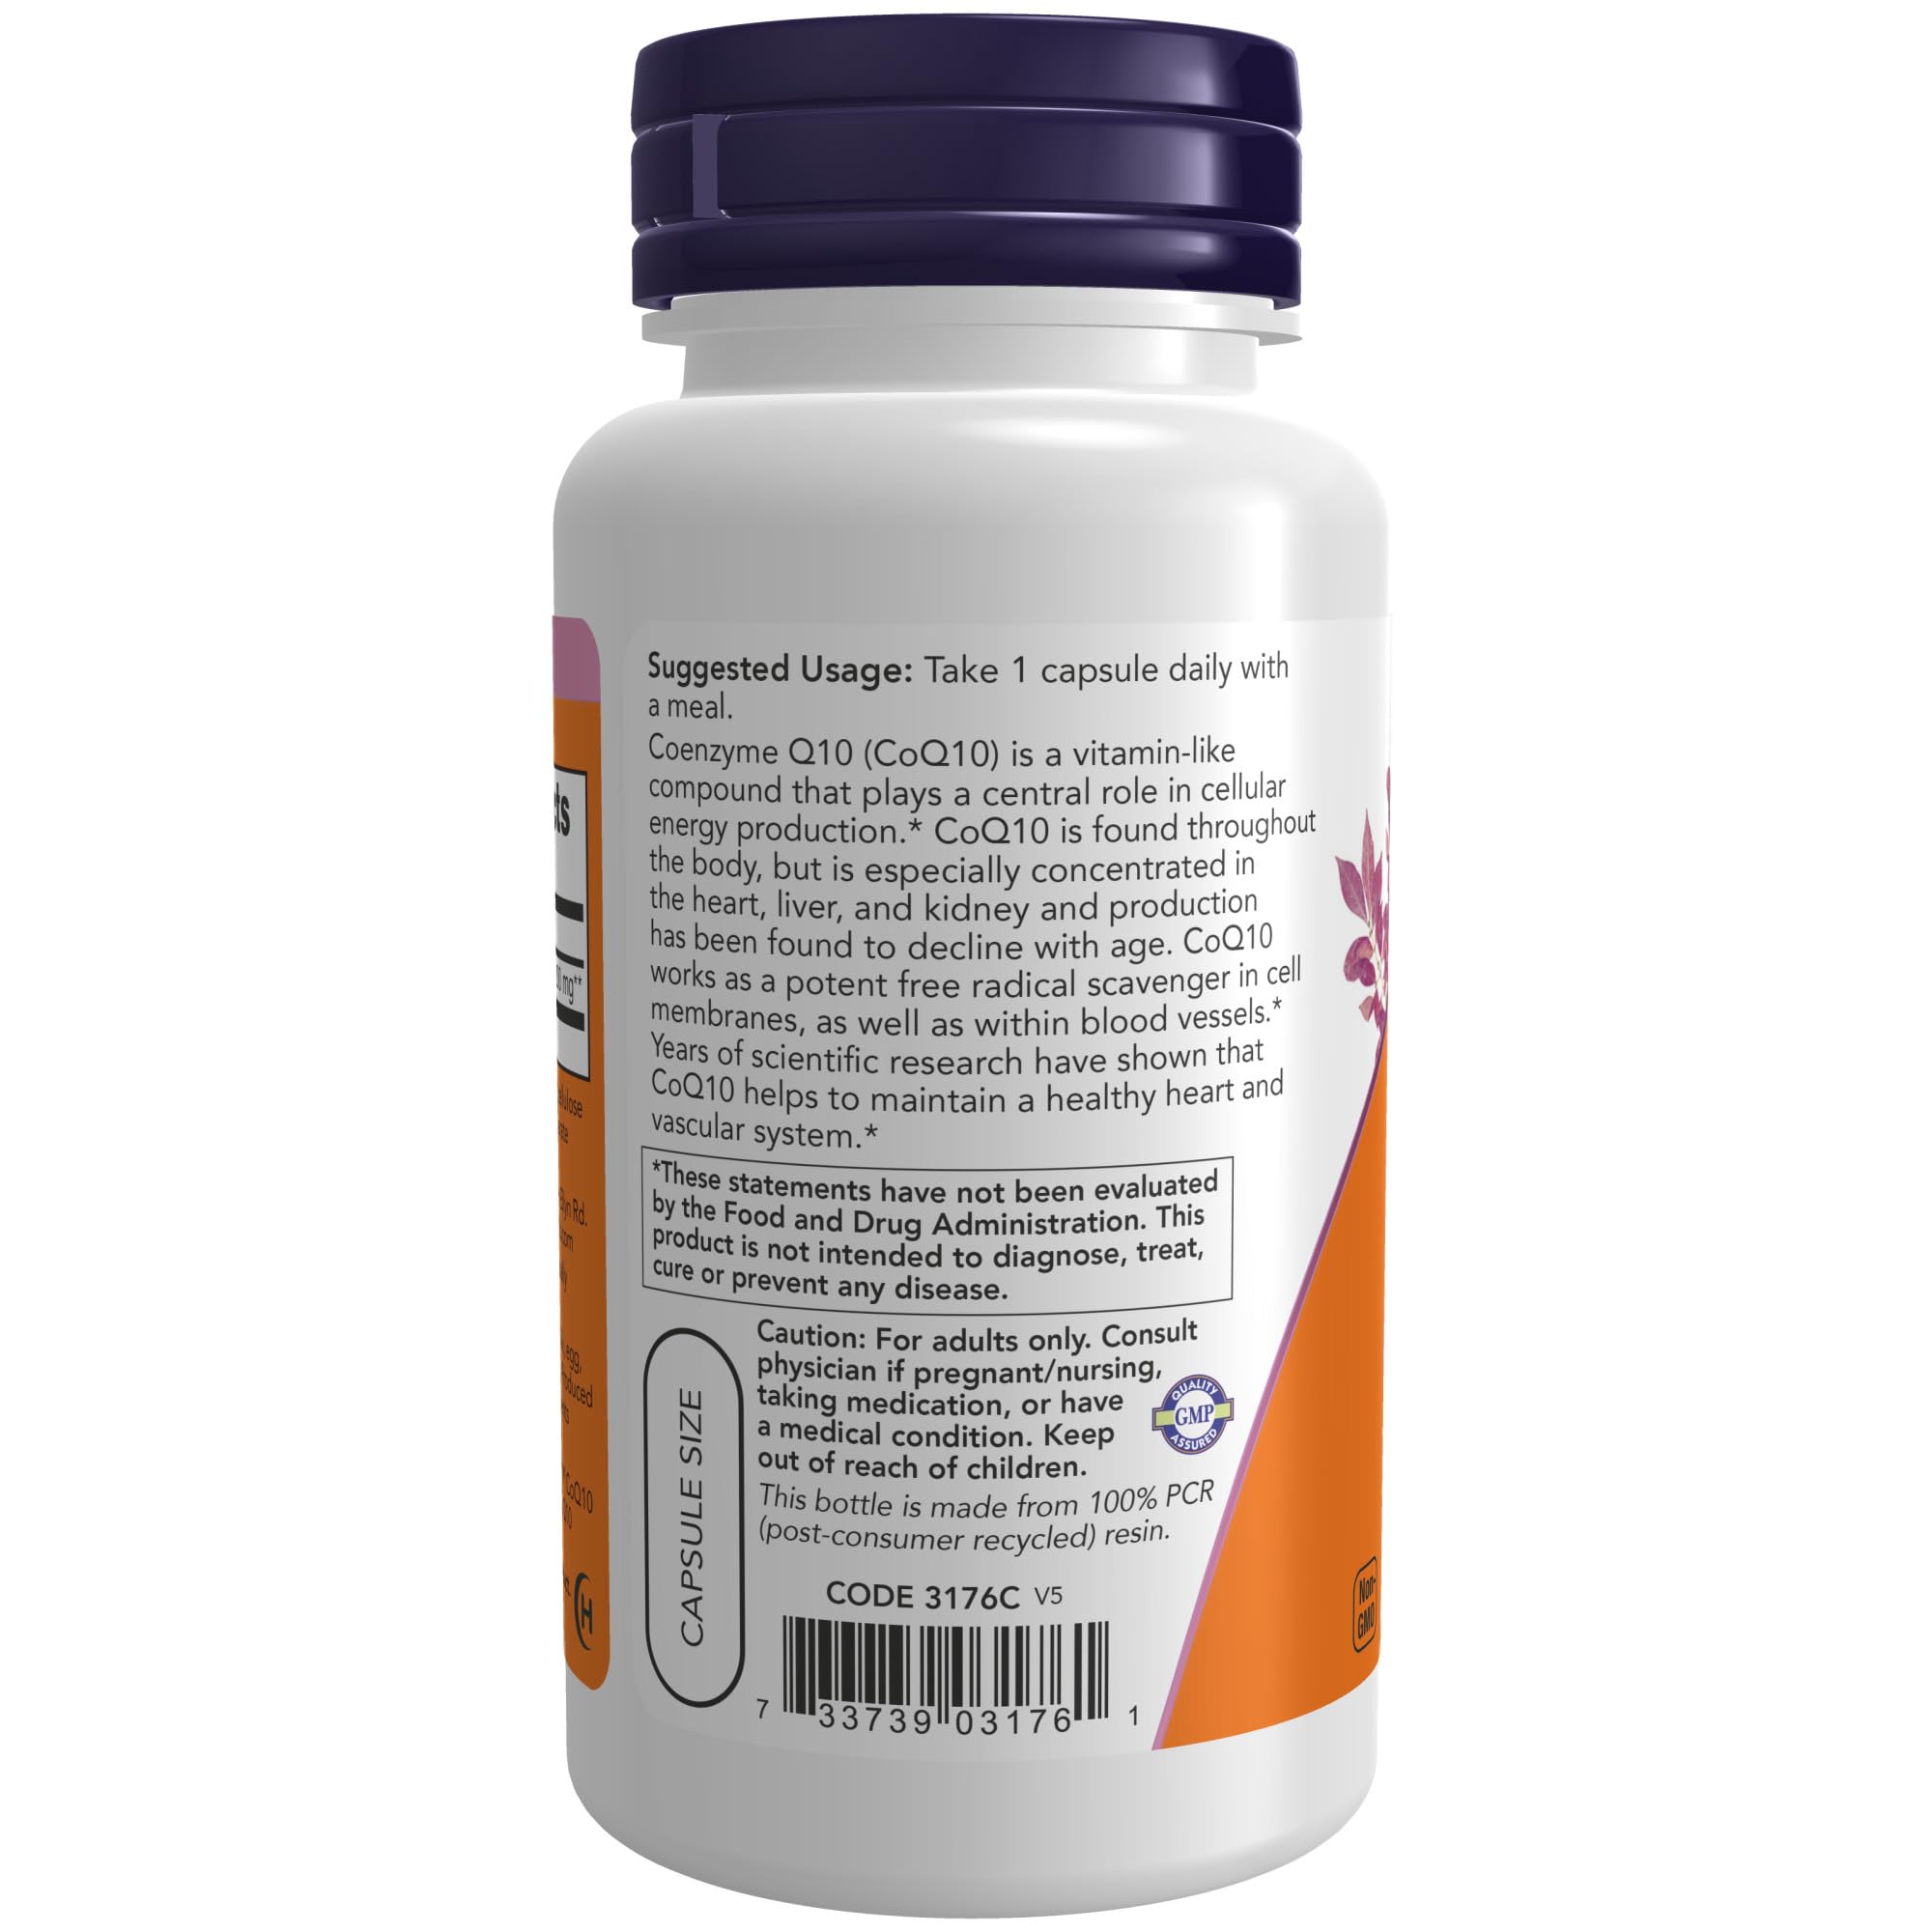 NOW Supplements, CoQ10 (Coenzyme Q10) 200 mg, Cardiovascular Health*, 60 Veg Capsules